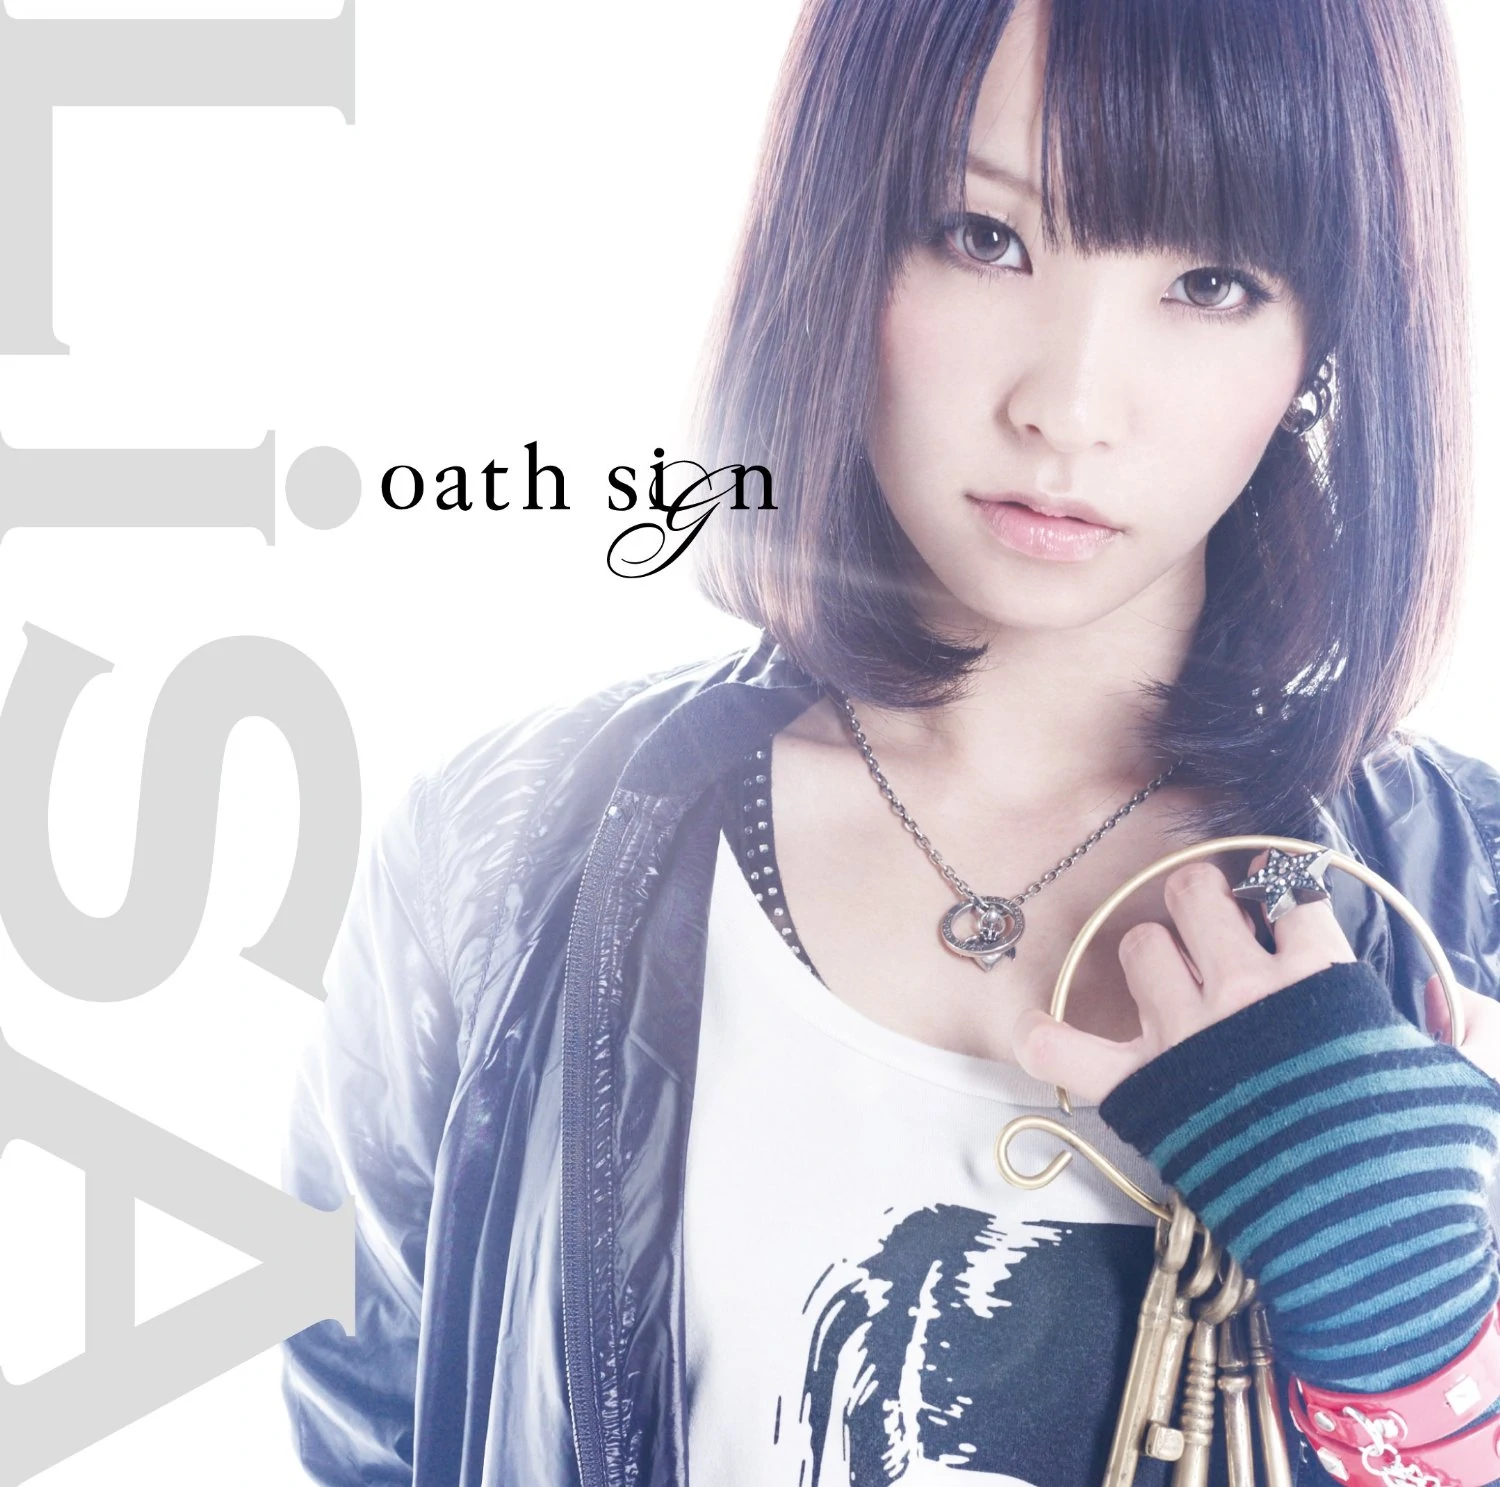 LiSA — oath sign cover artwork